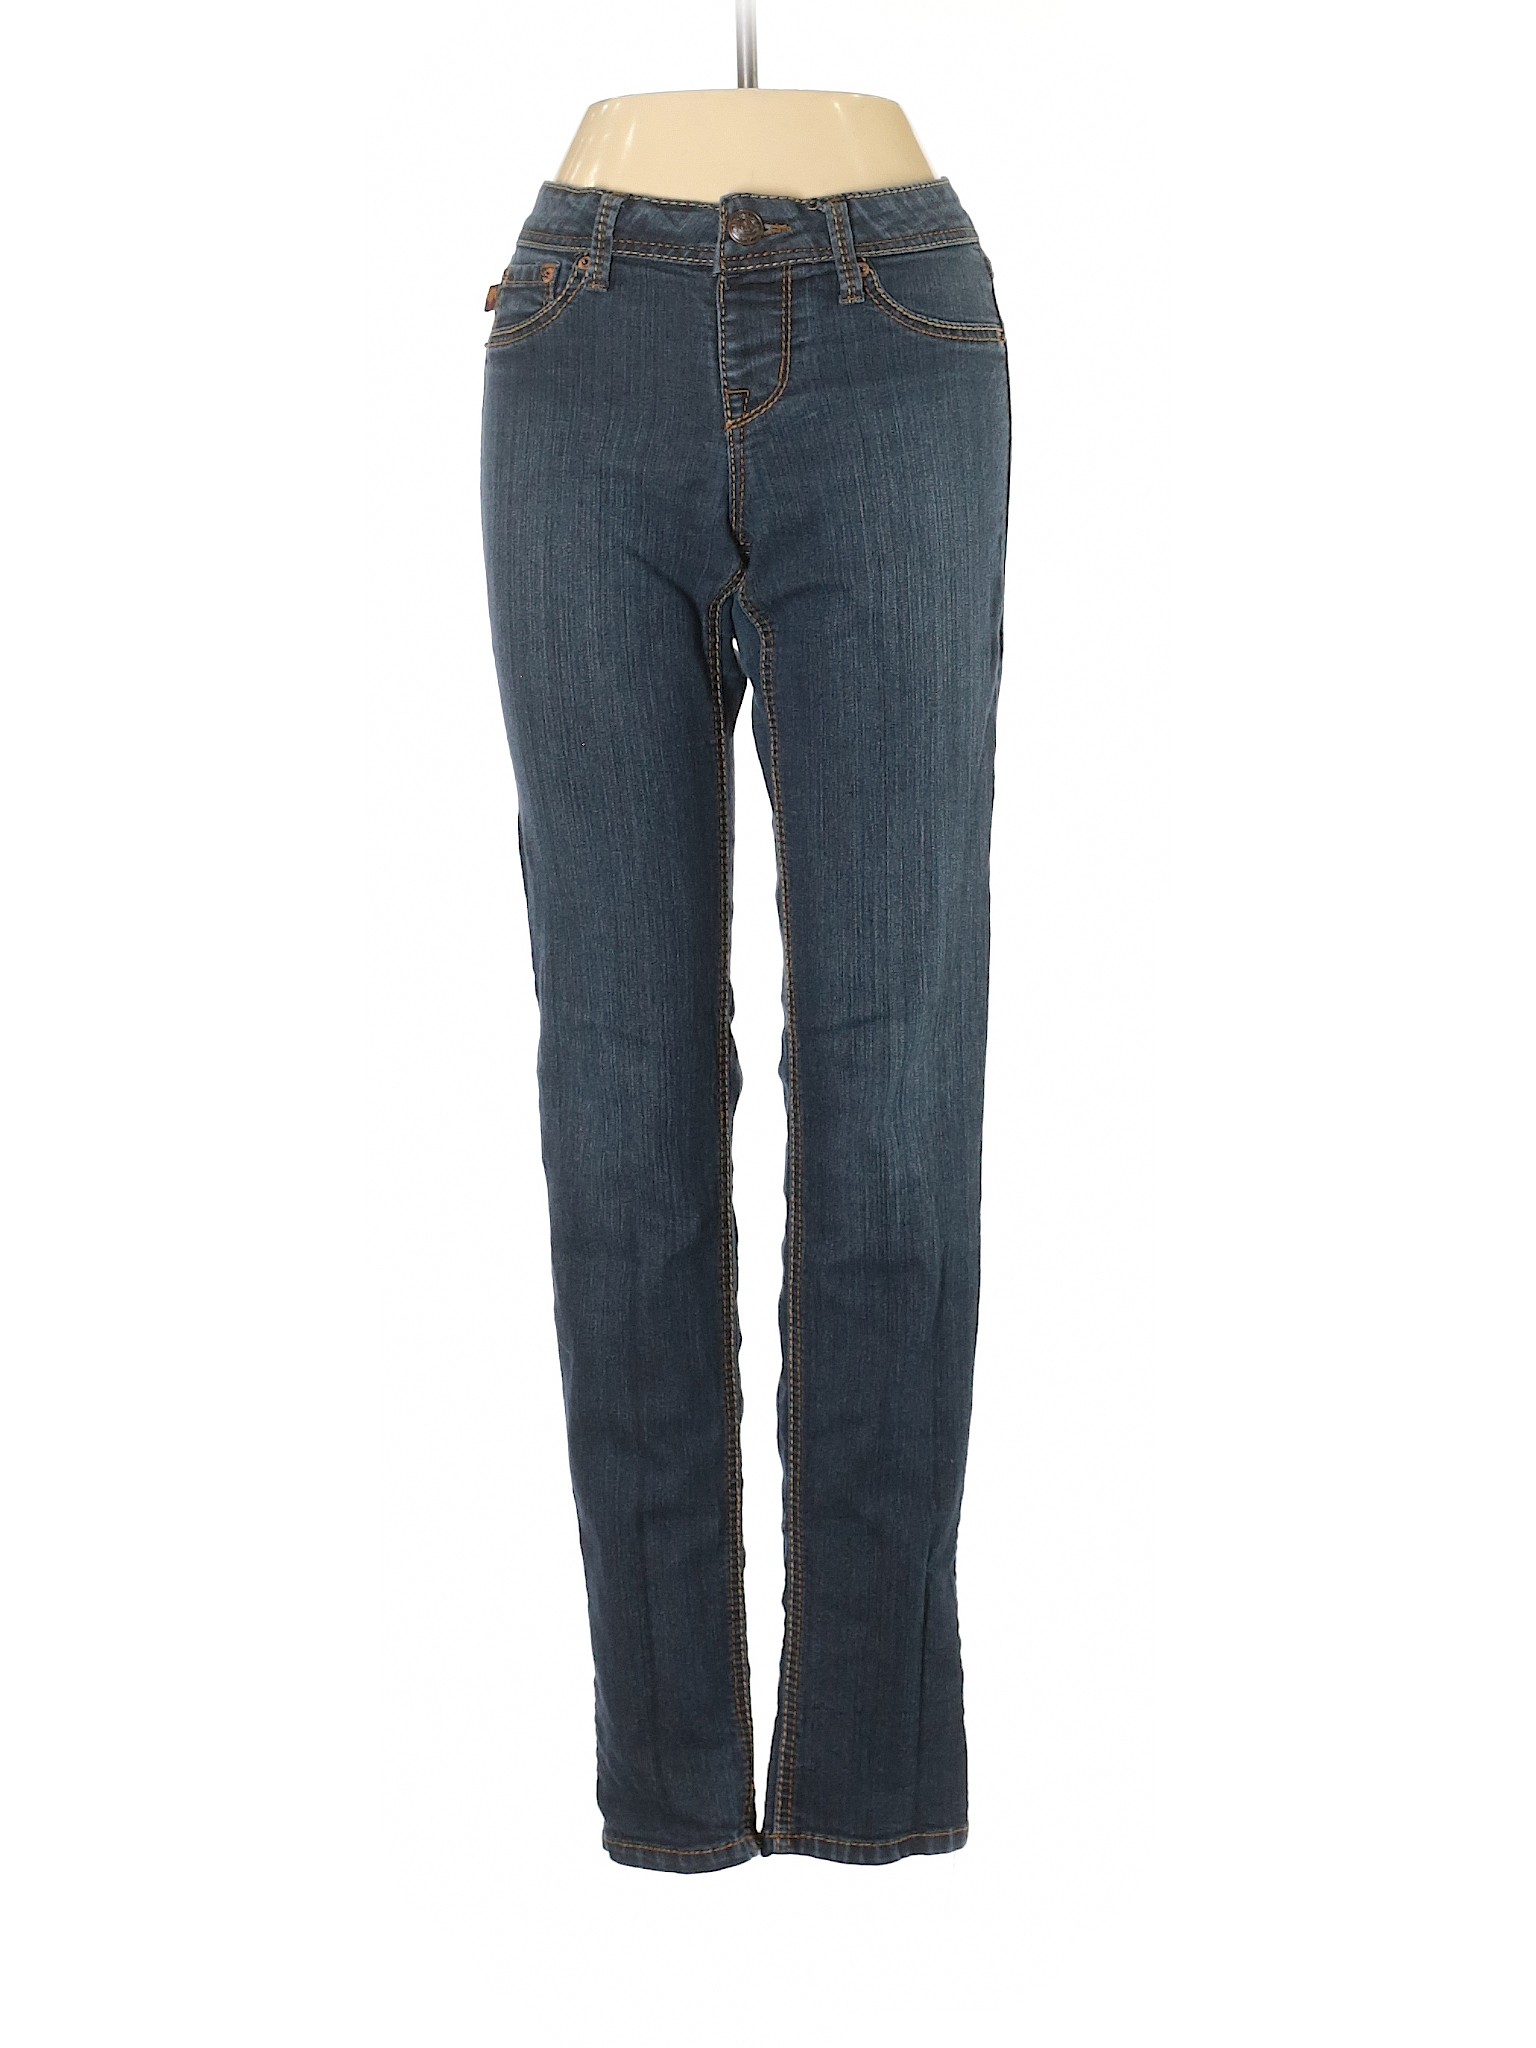 Domaine Brand Jeans Women Blue Jeans S | eBay